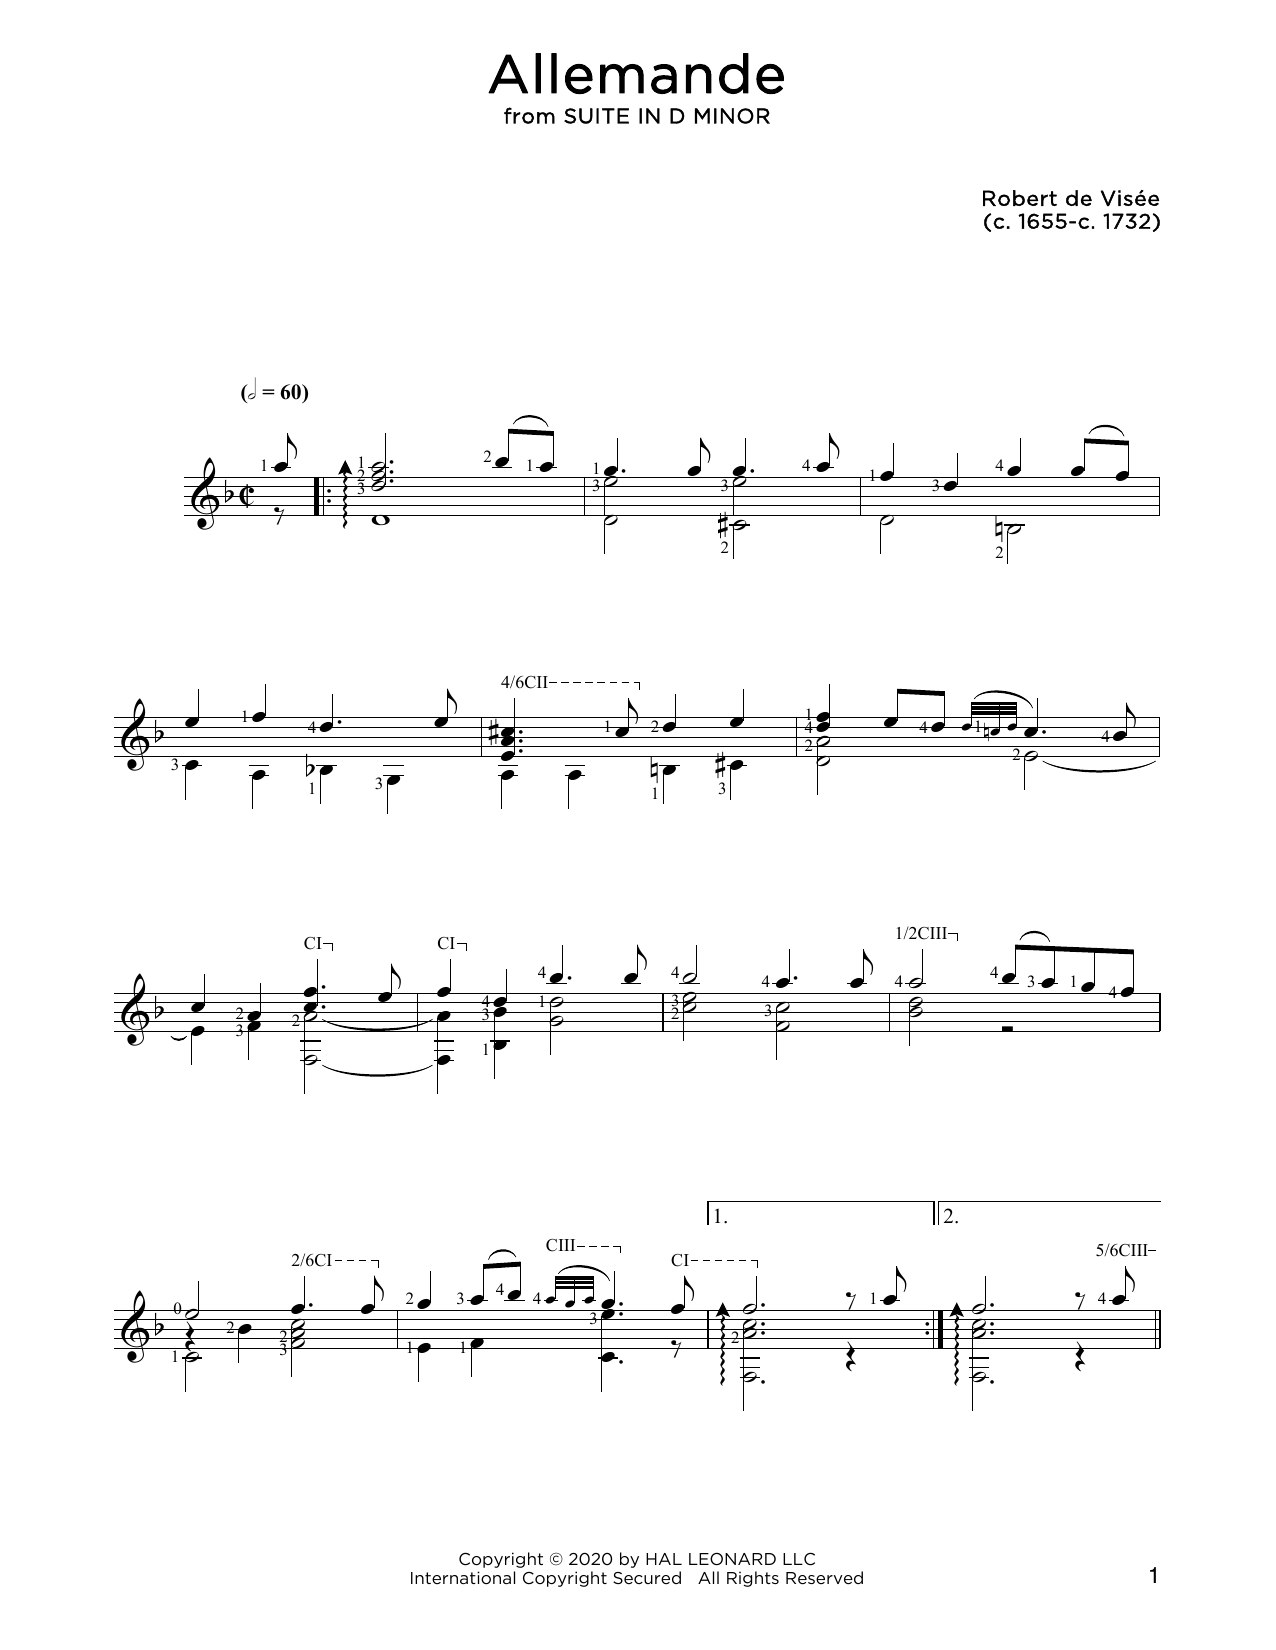 Robert de Visee Allemande Sheet Music Notes & Chords for Solo Guitar - Download or Print PDF